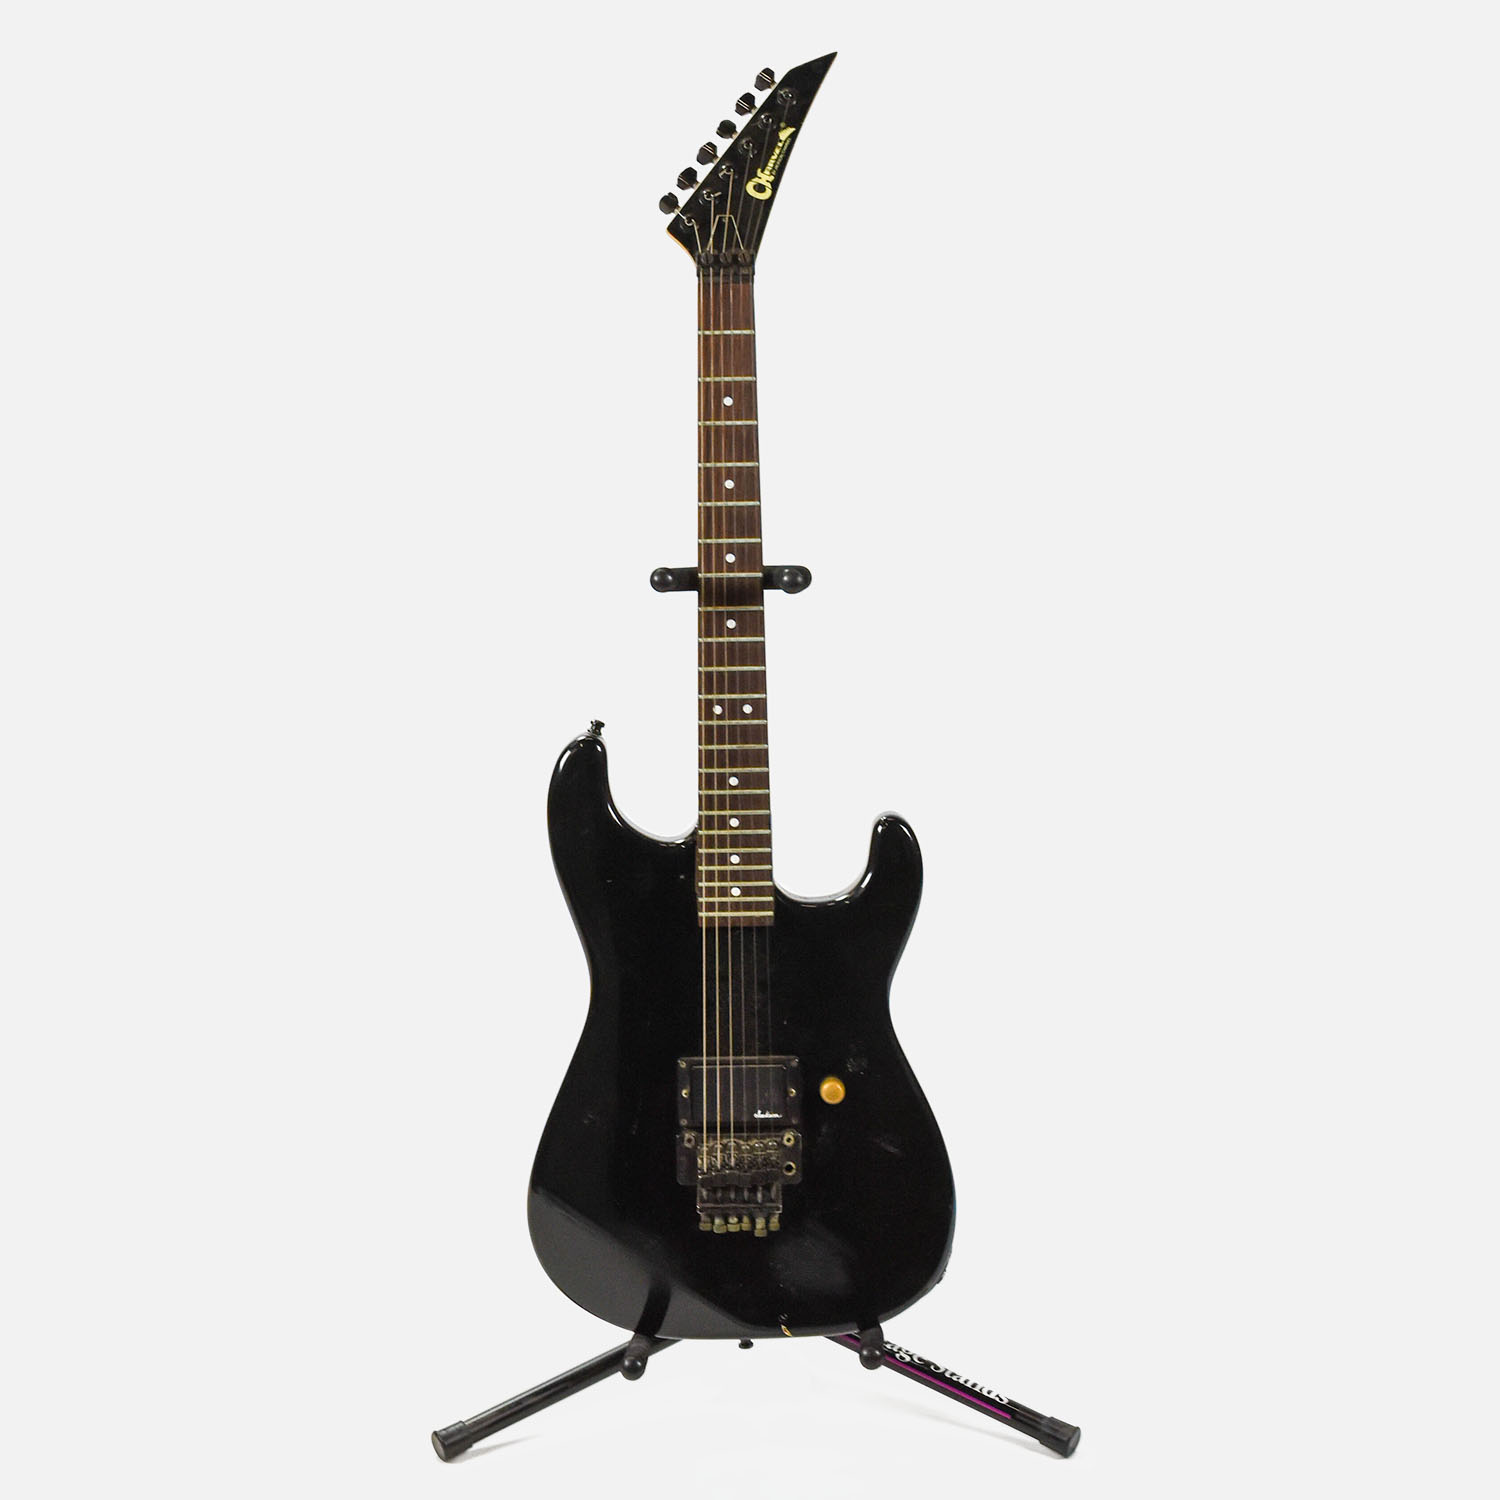 1986 Model 2 Black Jackson Charvel Electric Guitar